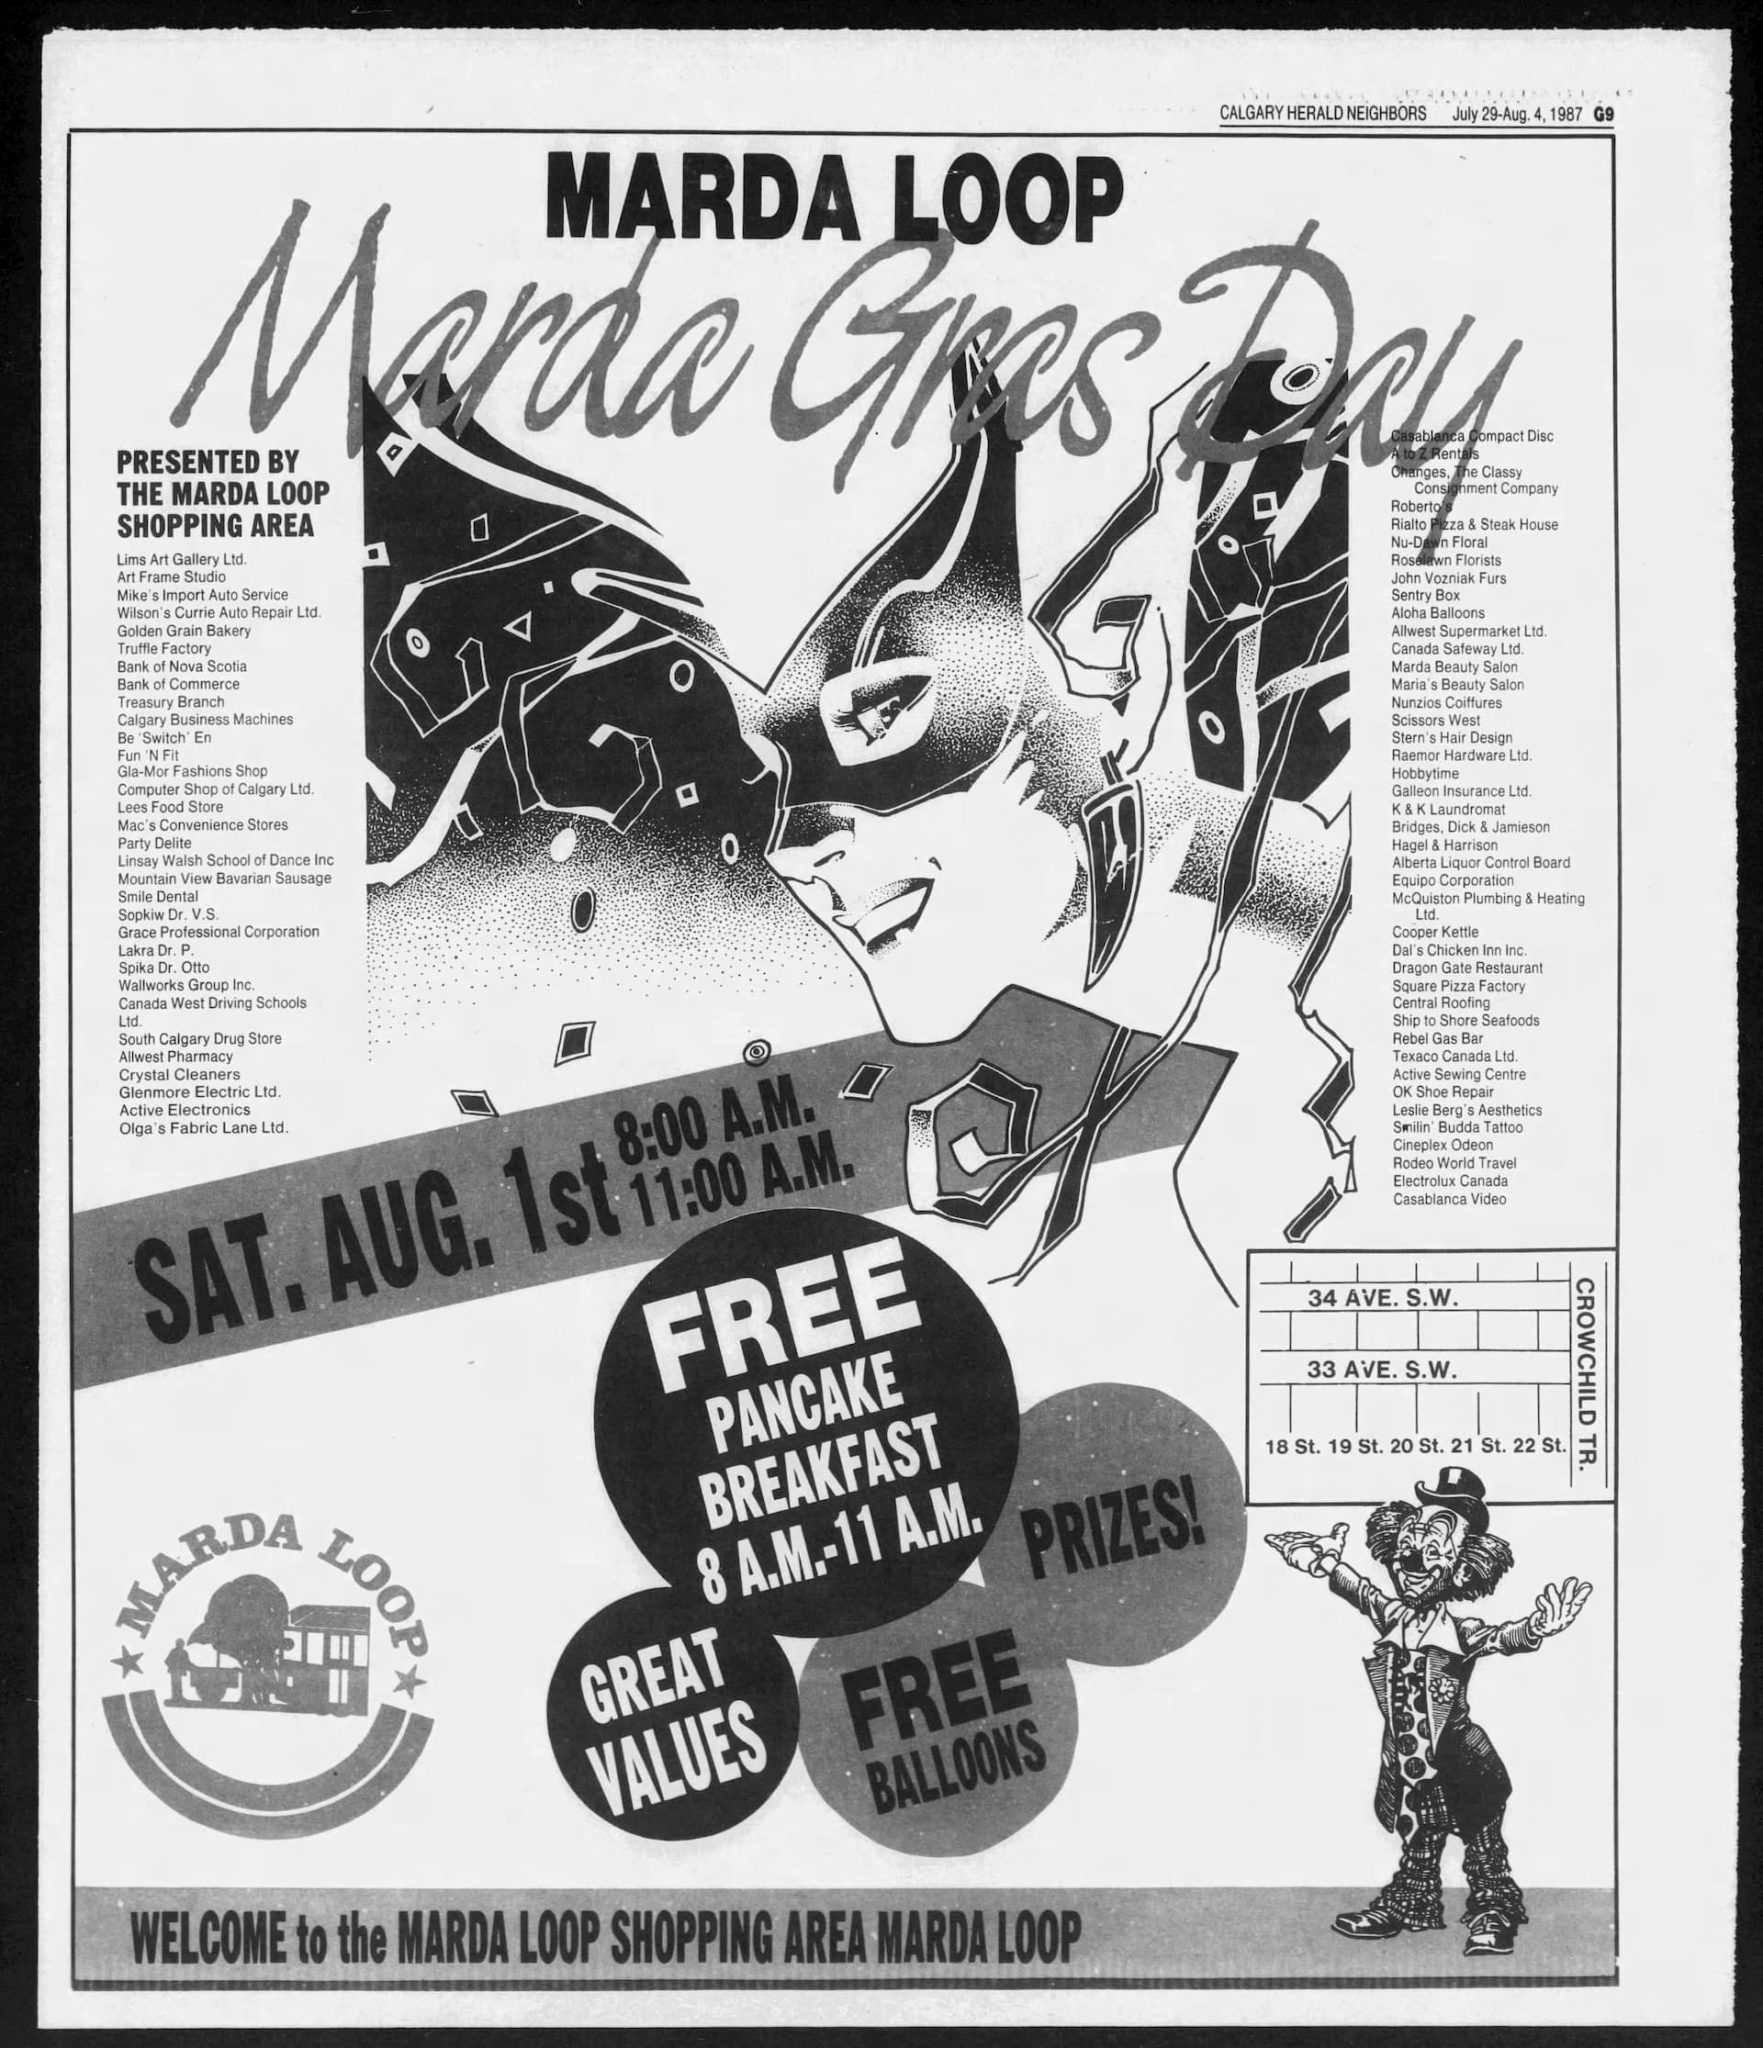 Visit Marda Loop Back to the Origins of Marda Gras